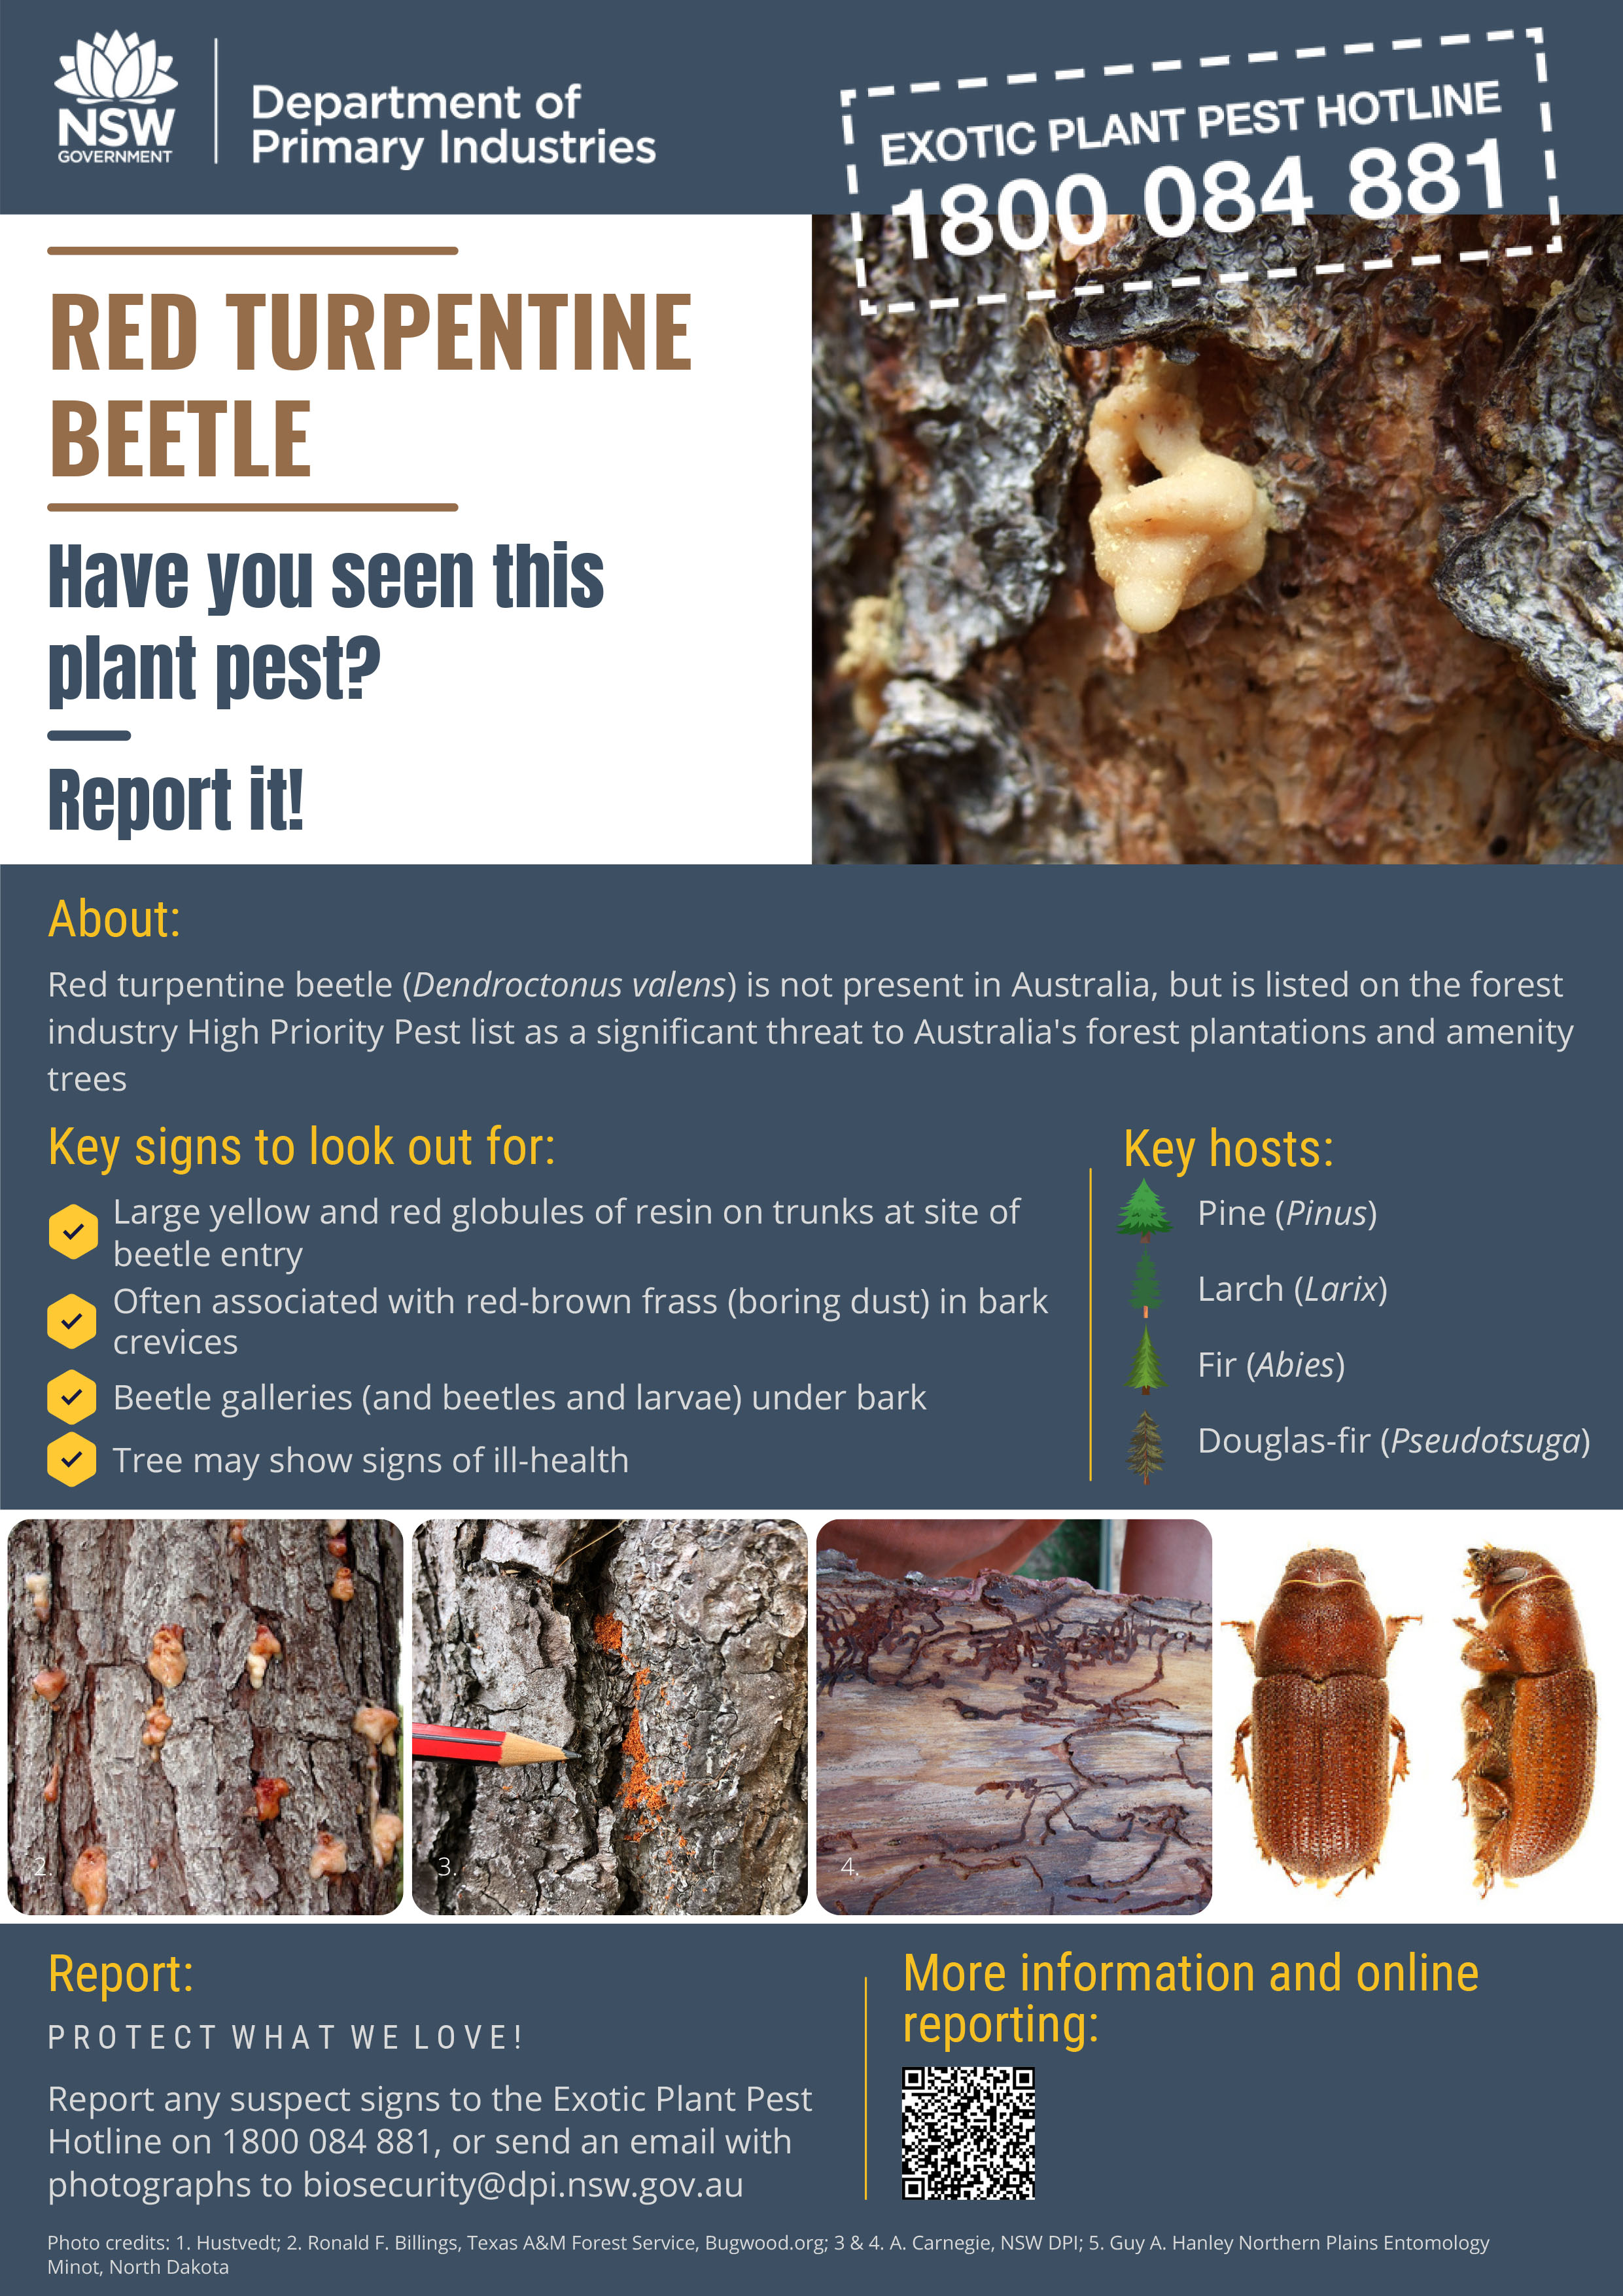 Red turpentine beetle Factsheet